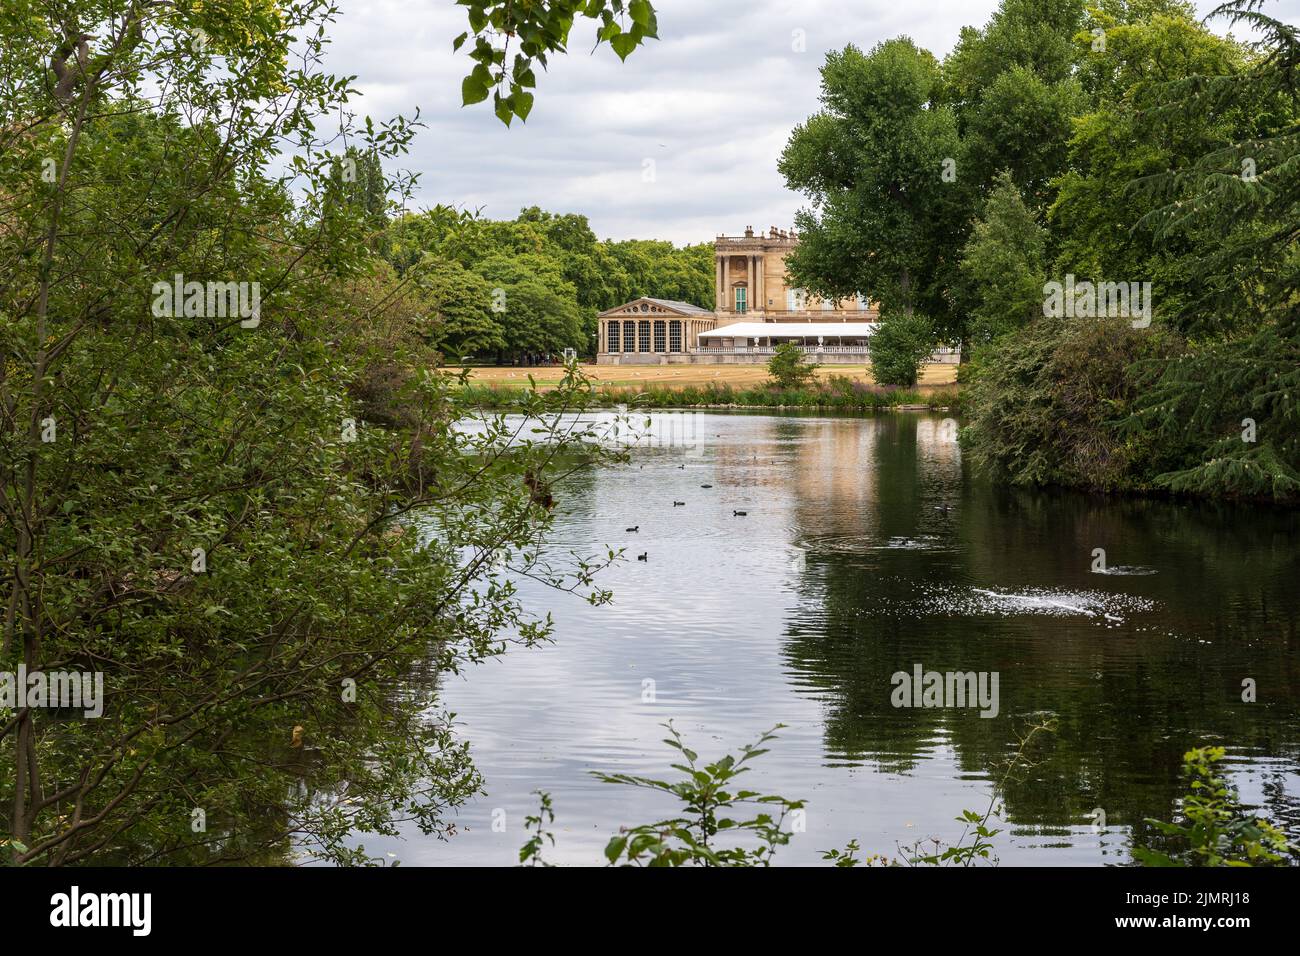 London, England: Garden inside Buckingham Palace Stock Photo